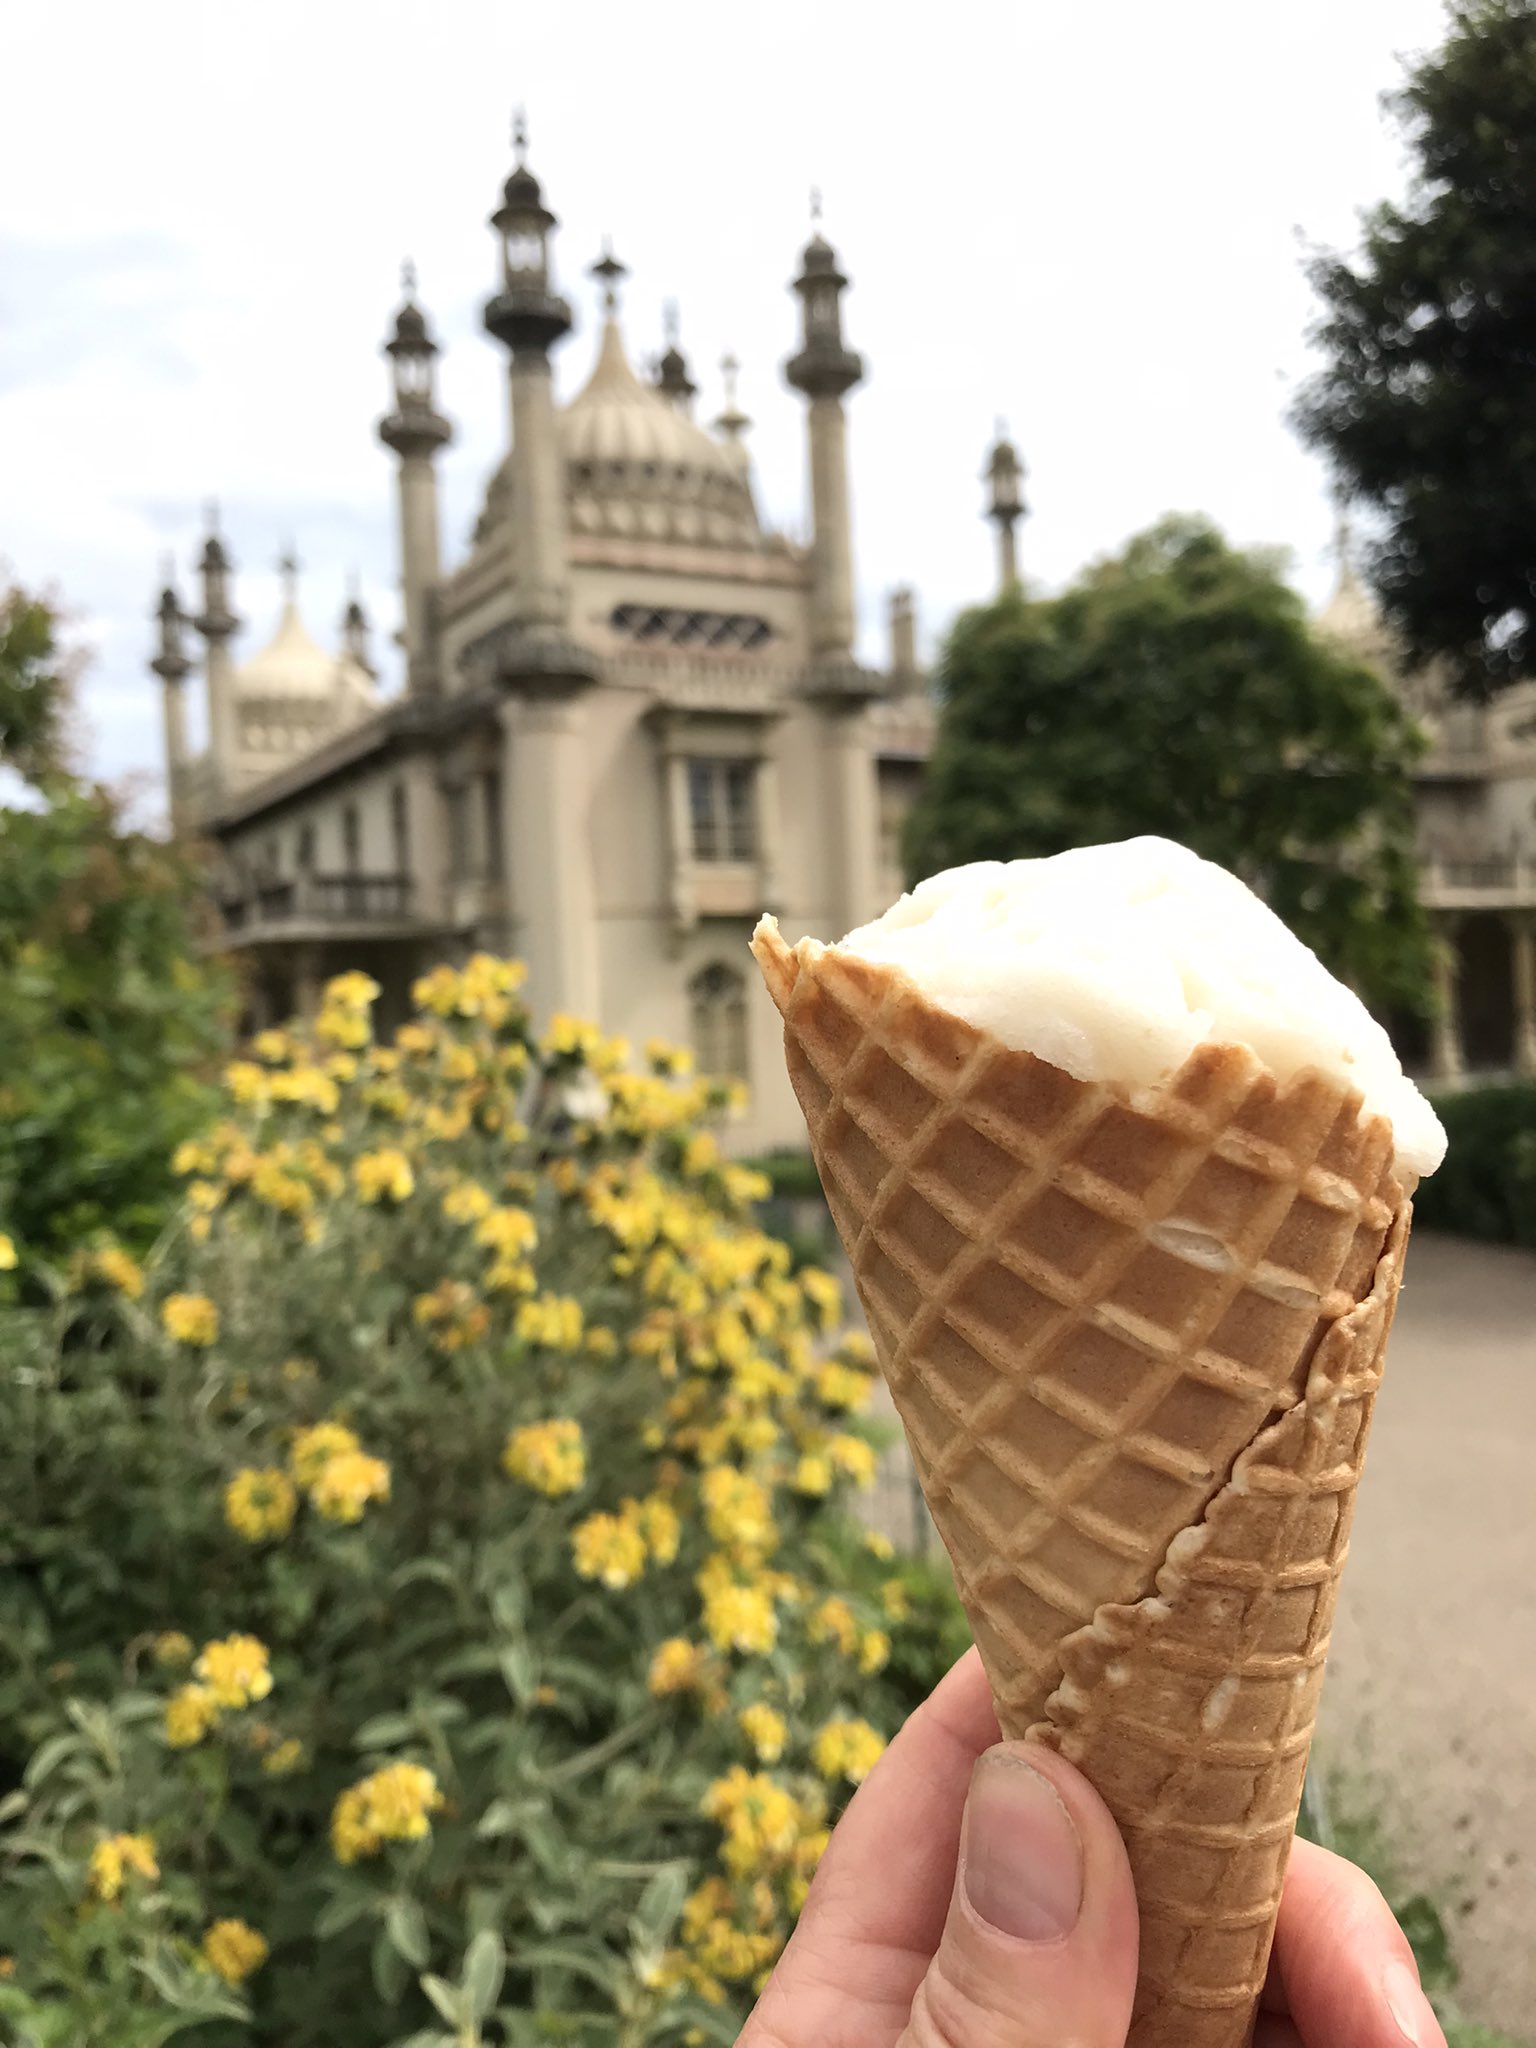 Pavilion with ice cream